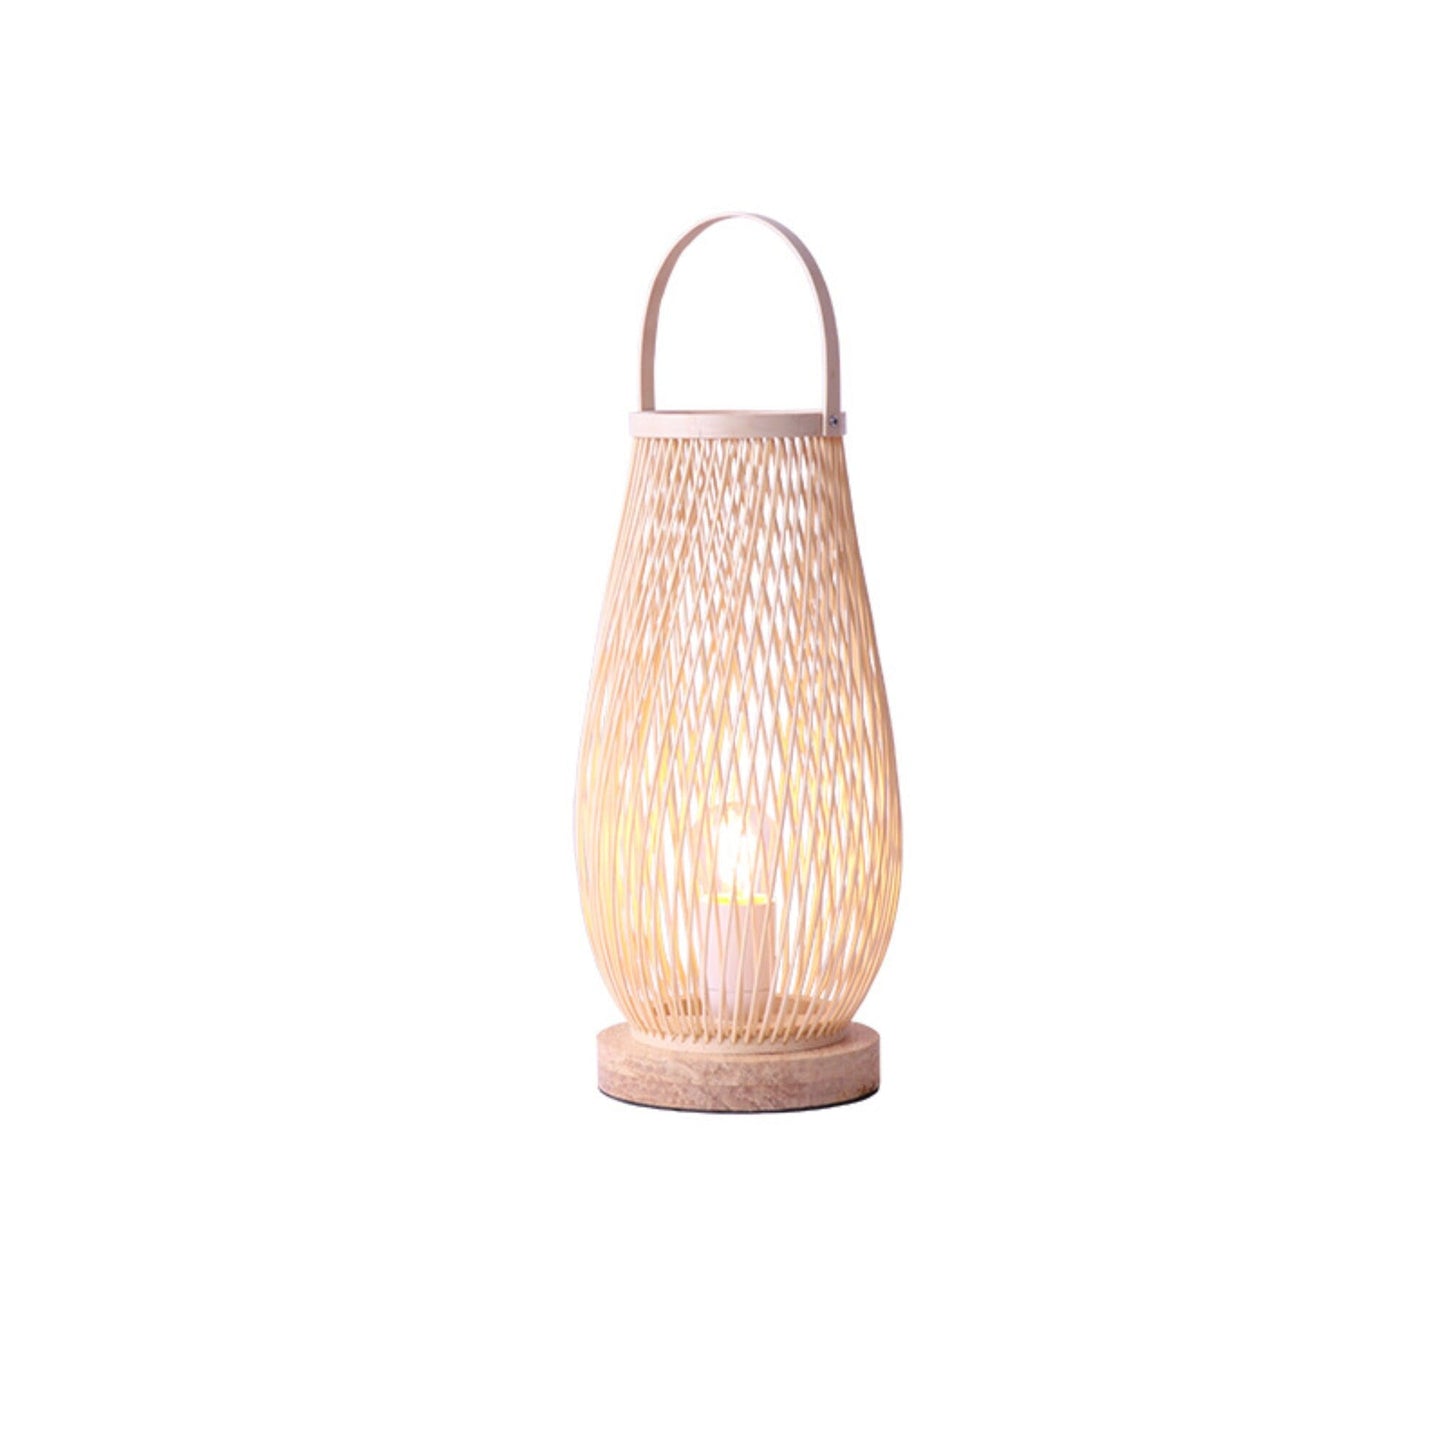 Bamboo Rattan Table Lamp | Mid Century Modern, Bohemian, Wicker Lampshade, Rustic Home Decor, Desk Lamp, Bedside Lamp, Mini Lamp - TABLE LAMP -